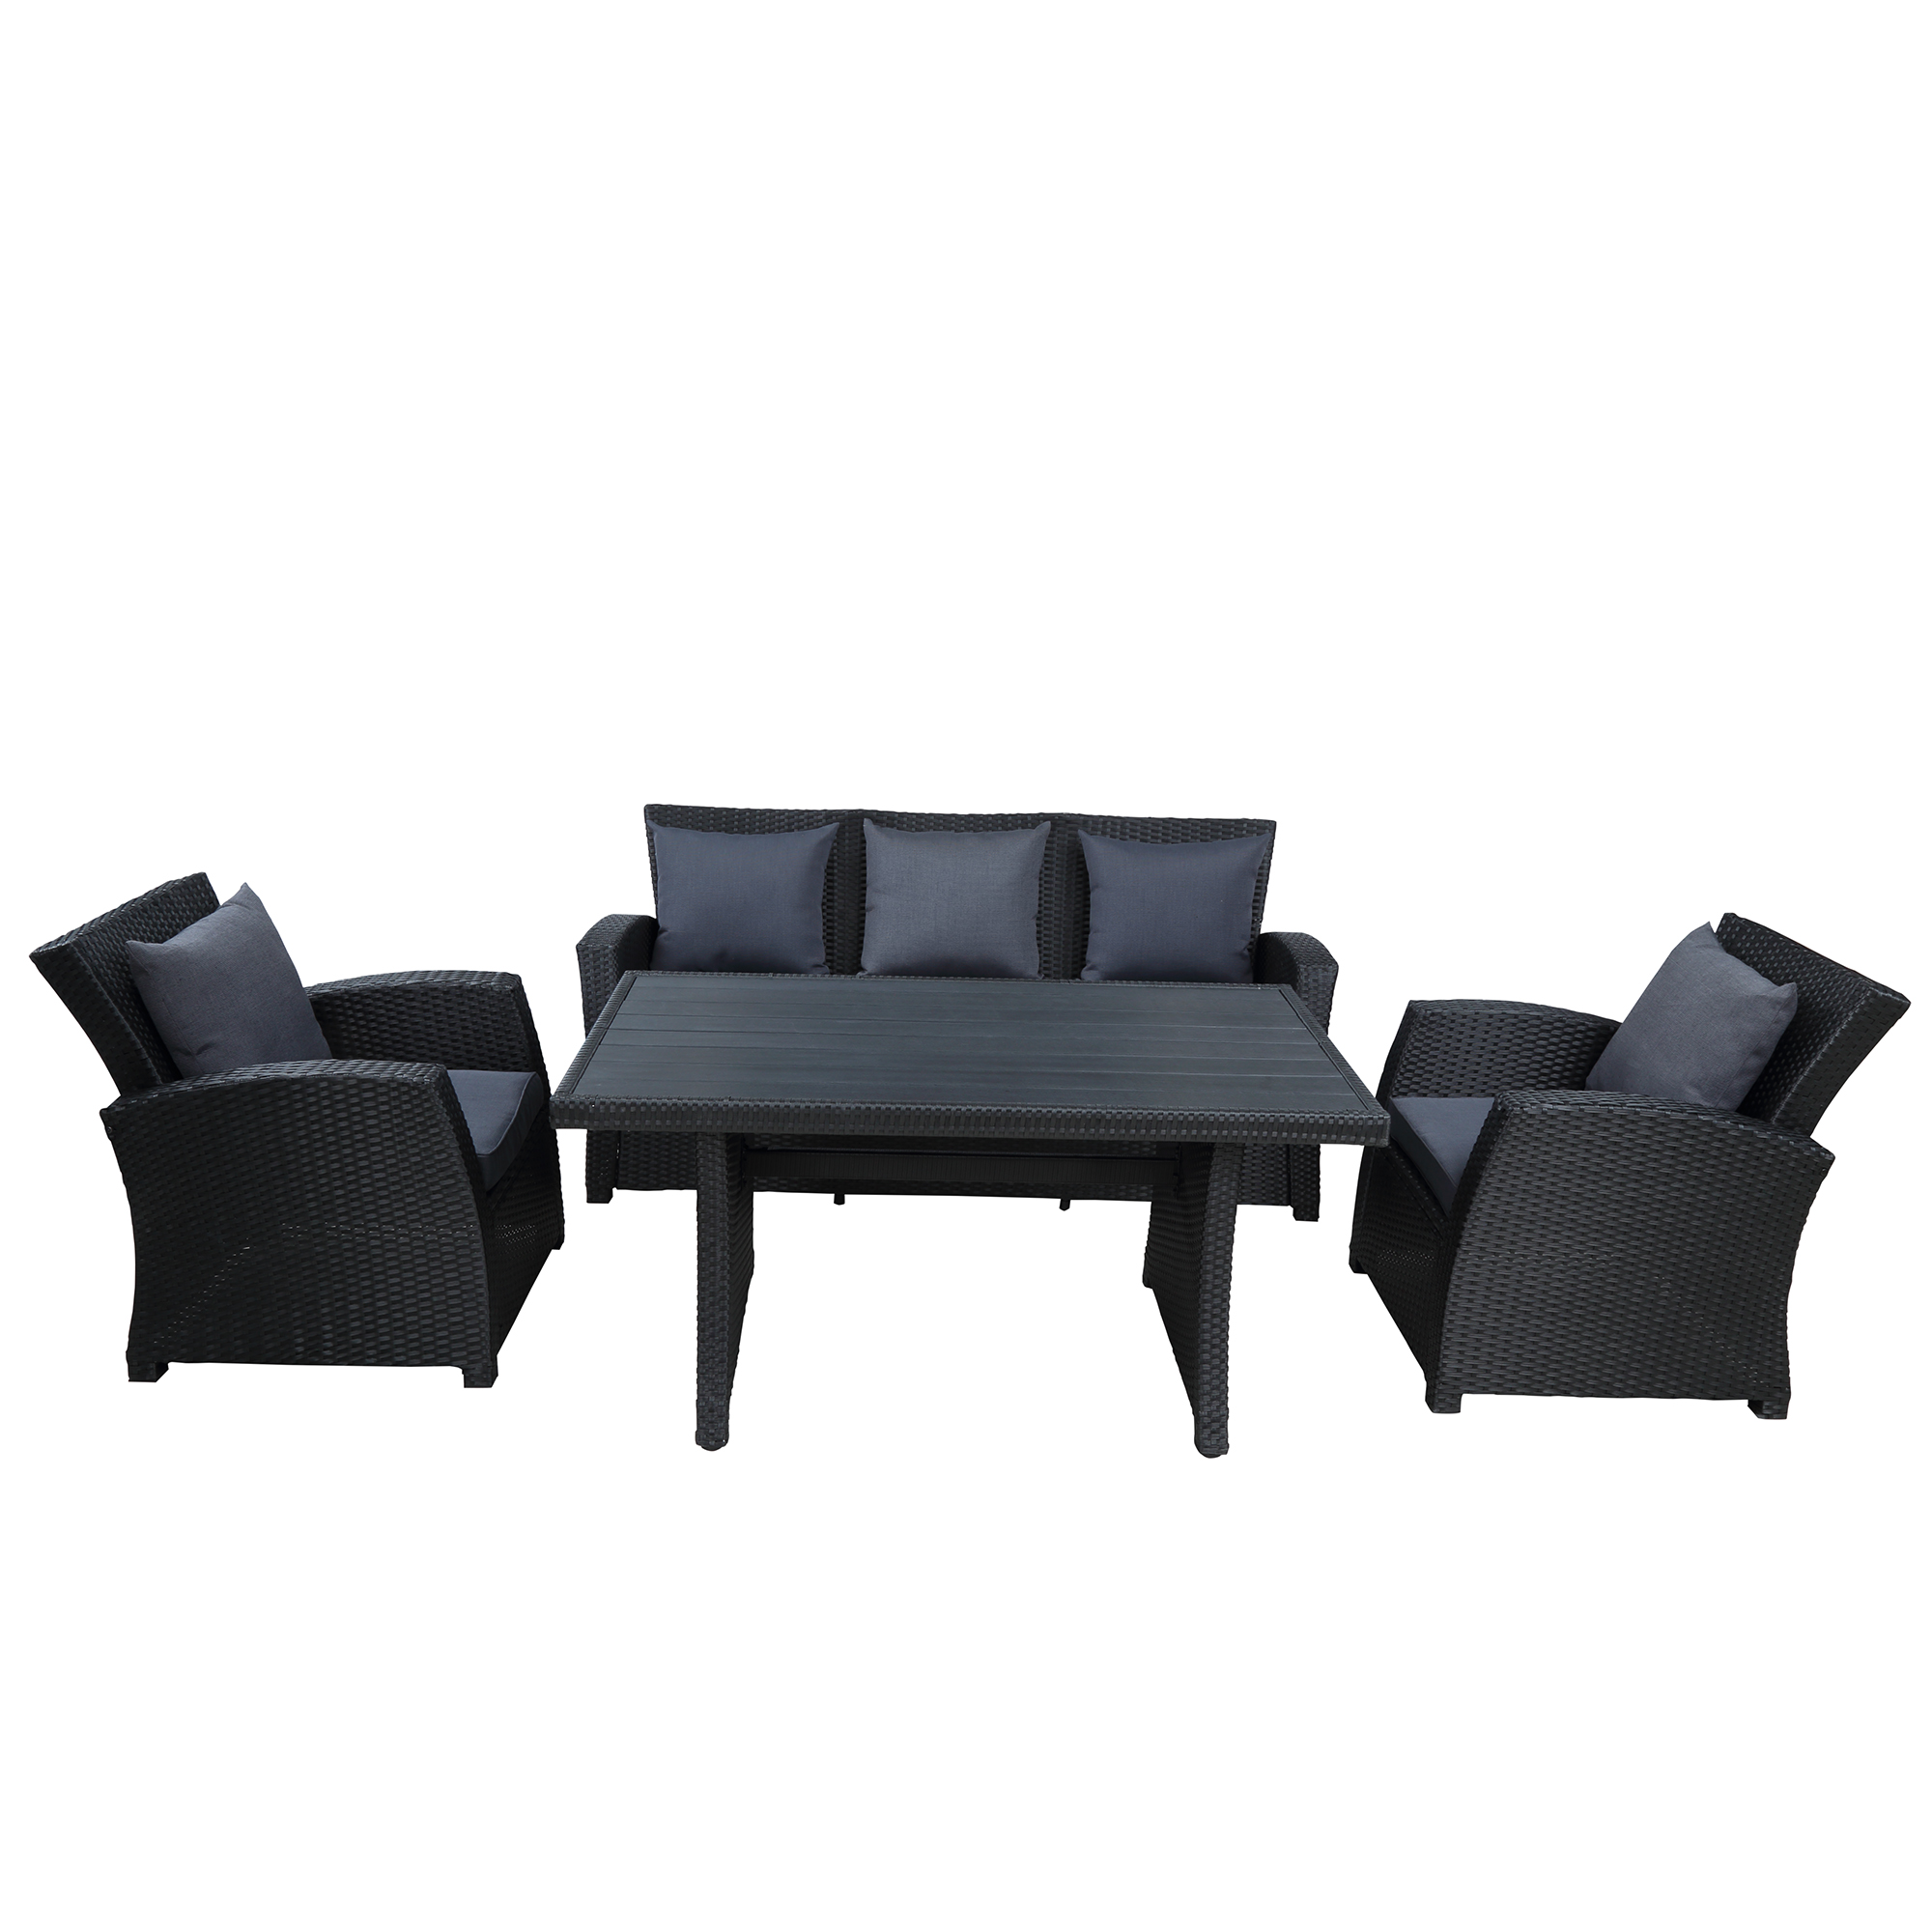 U_STYLE Outdoor Patio Furniture Set 4-Piece Conversation Set Black Wicker Furniture Sofa Set with Dark Grey Cushions-CASAINC